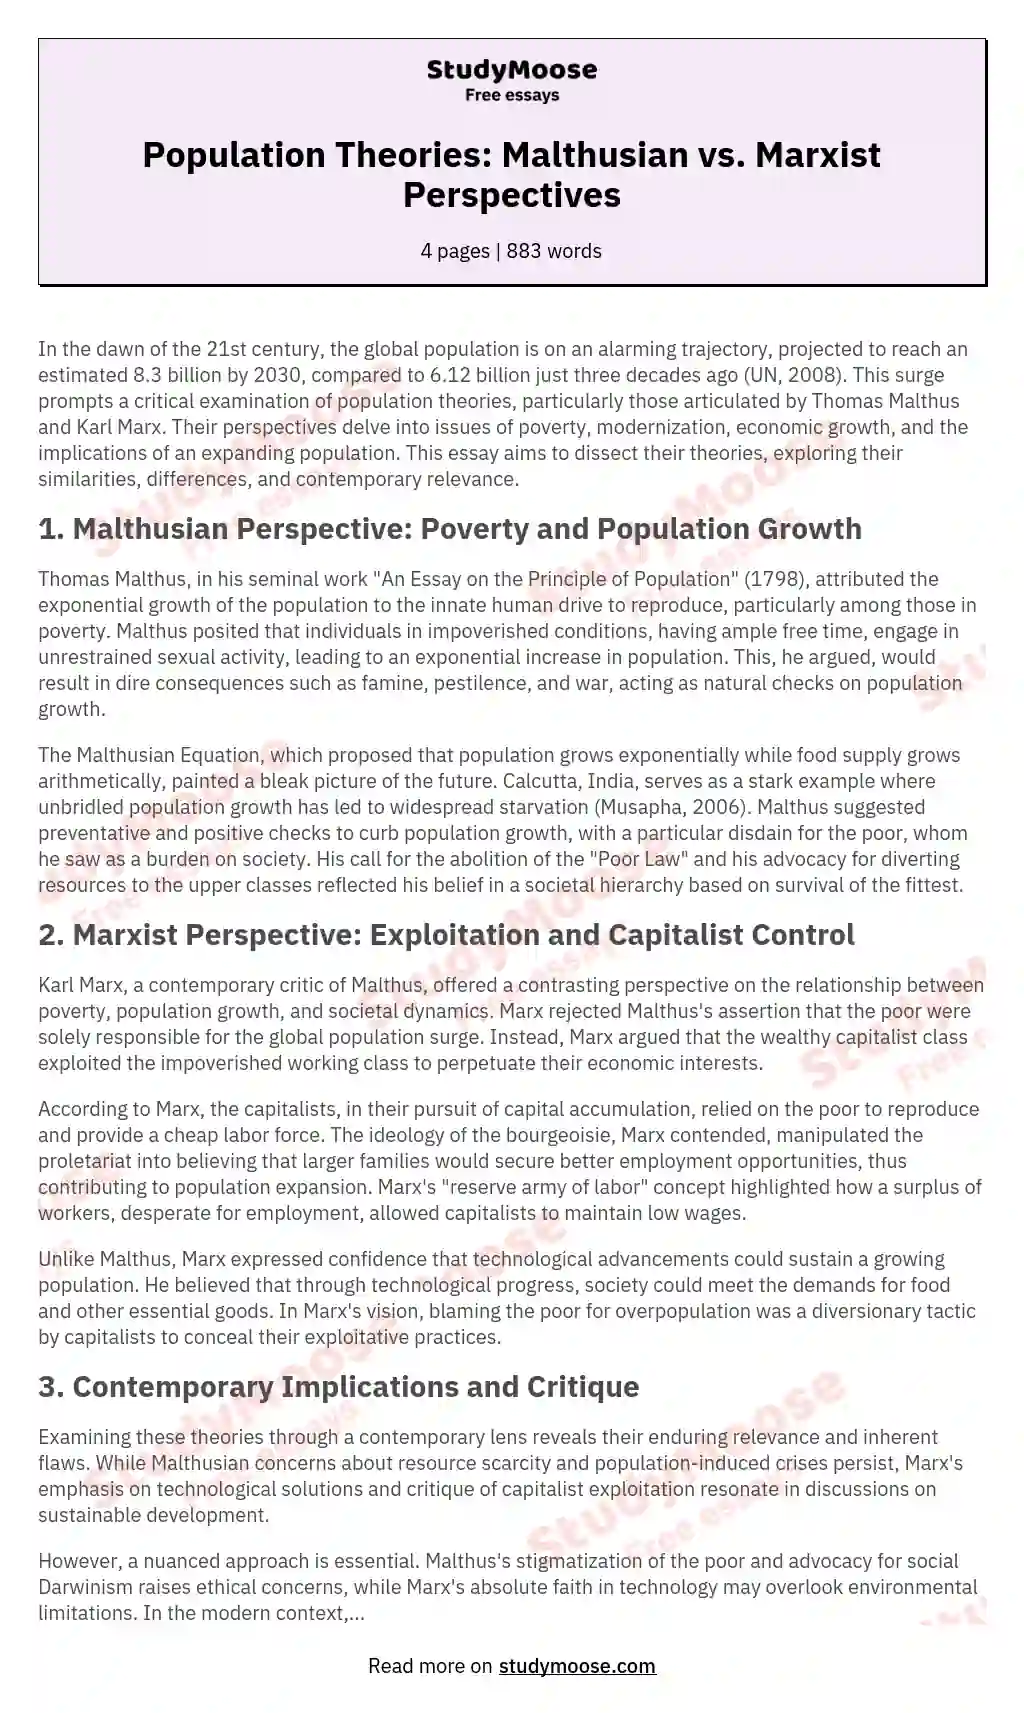 Population Theories: Malthusian vs. Marxist Perspectives essay